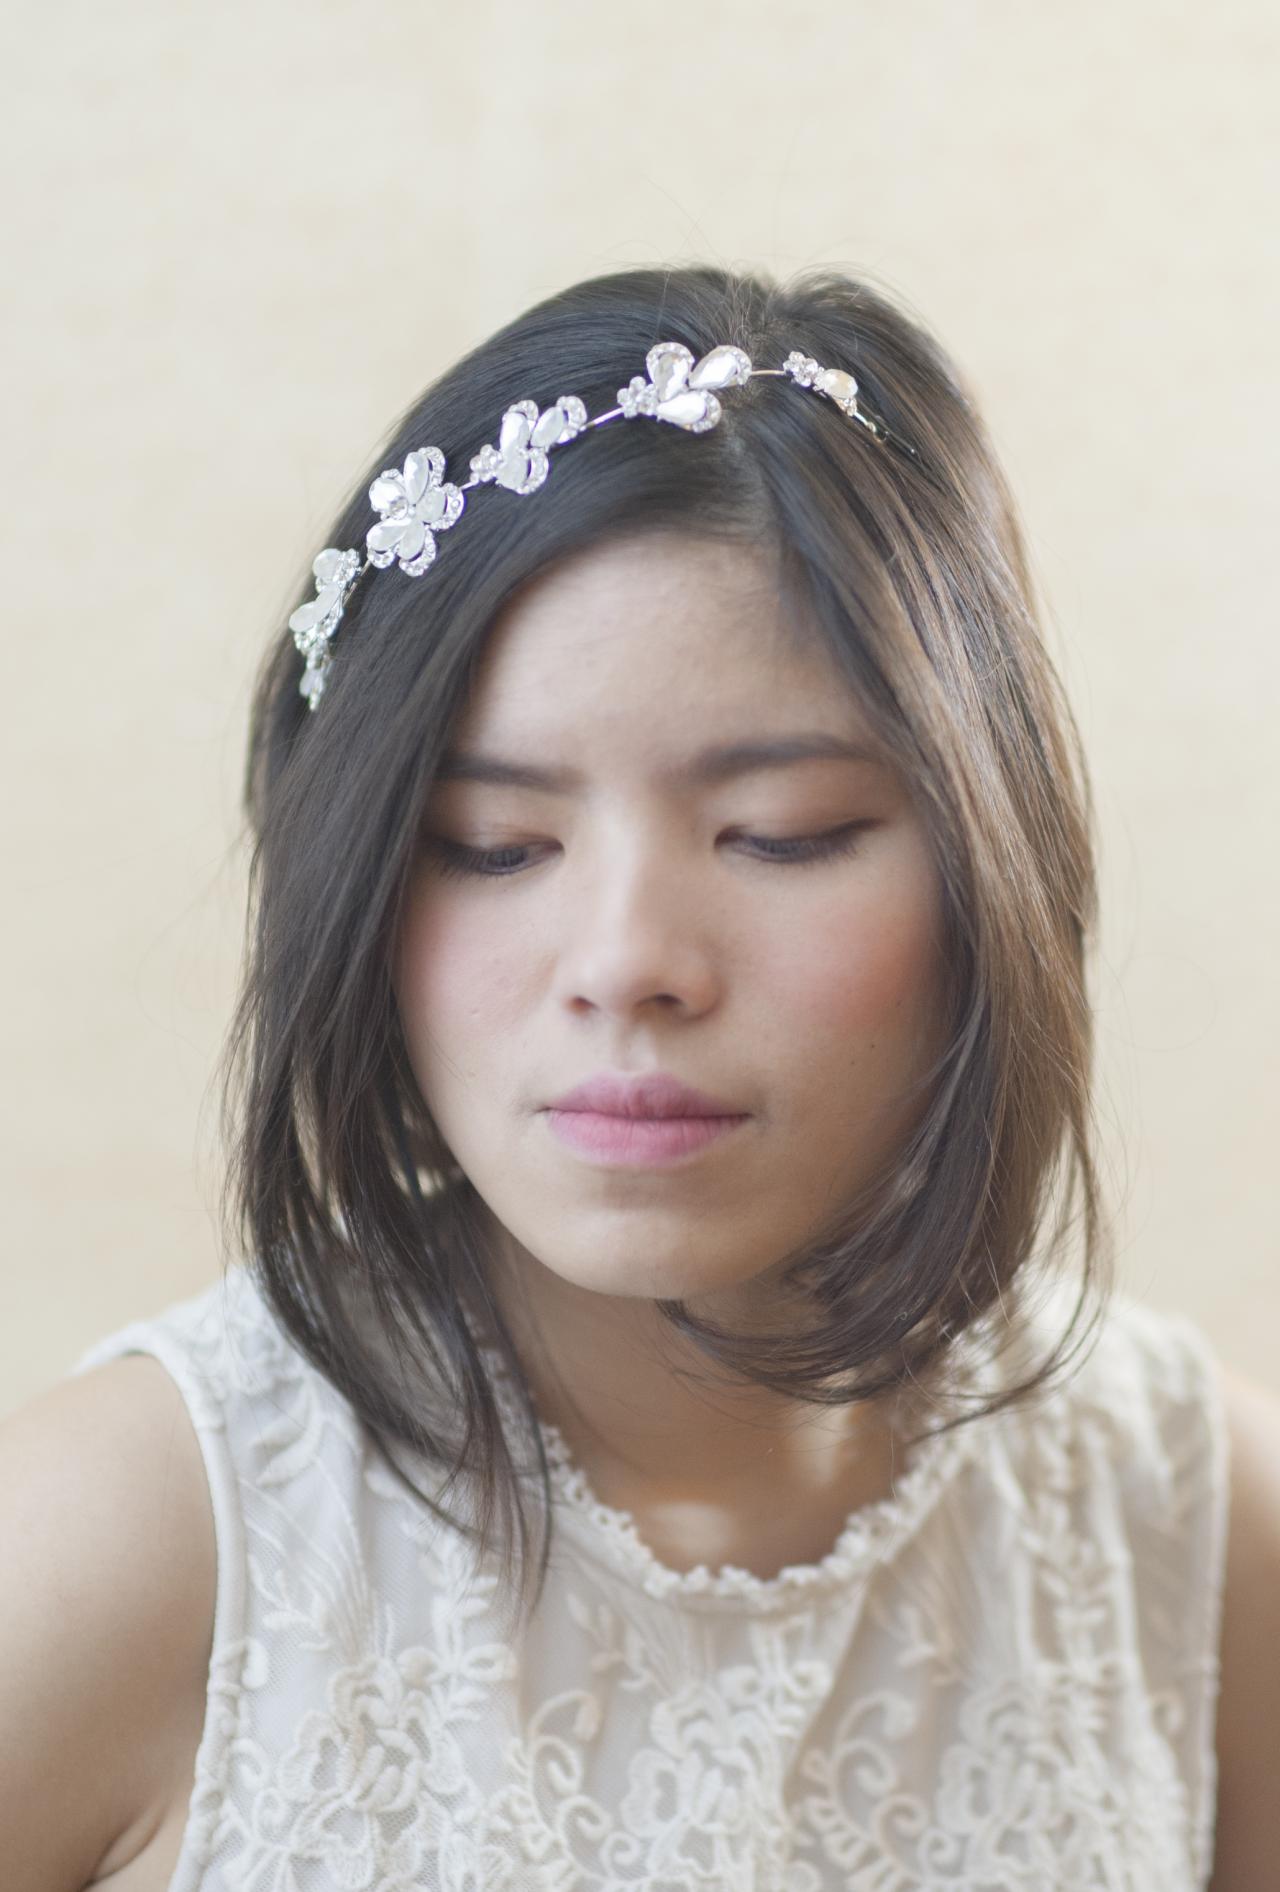 Rhinestone Flower Wedding Headpiece - Simple Bridal Headpiece - Hairband - Hair Accessory